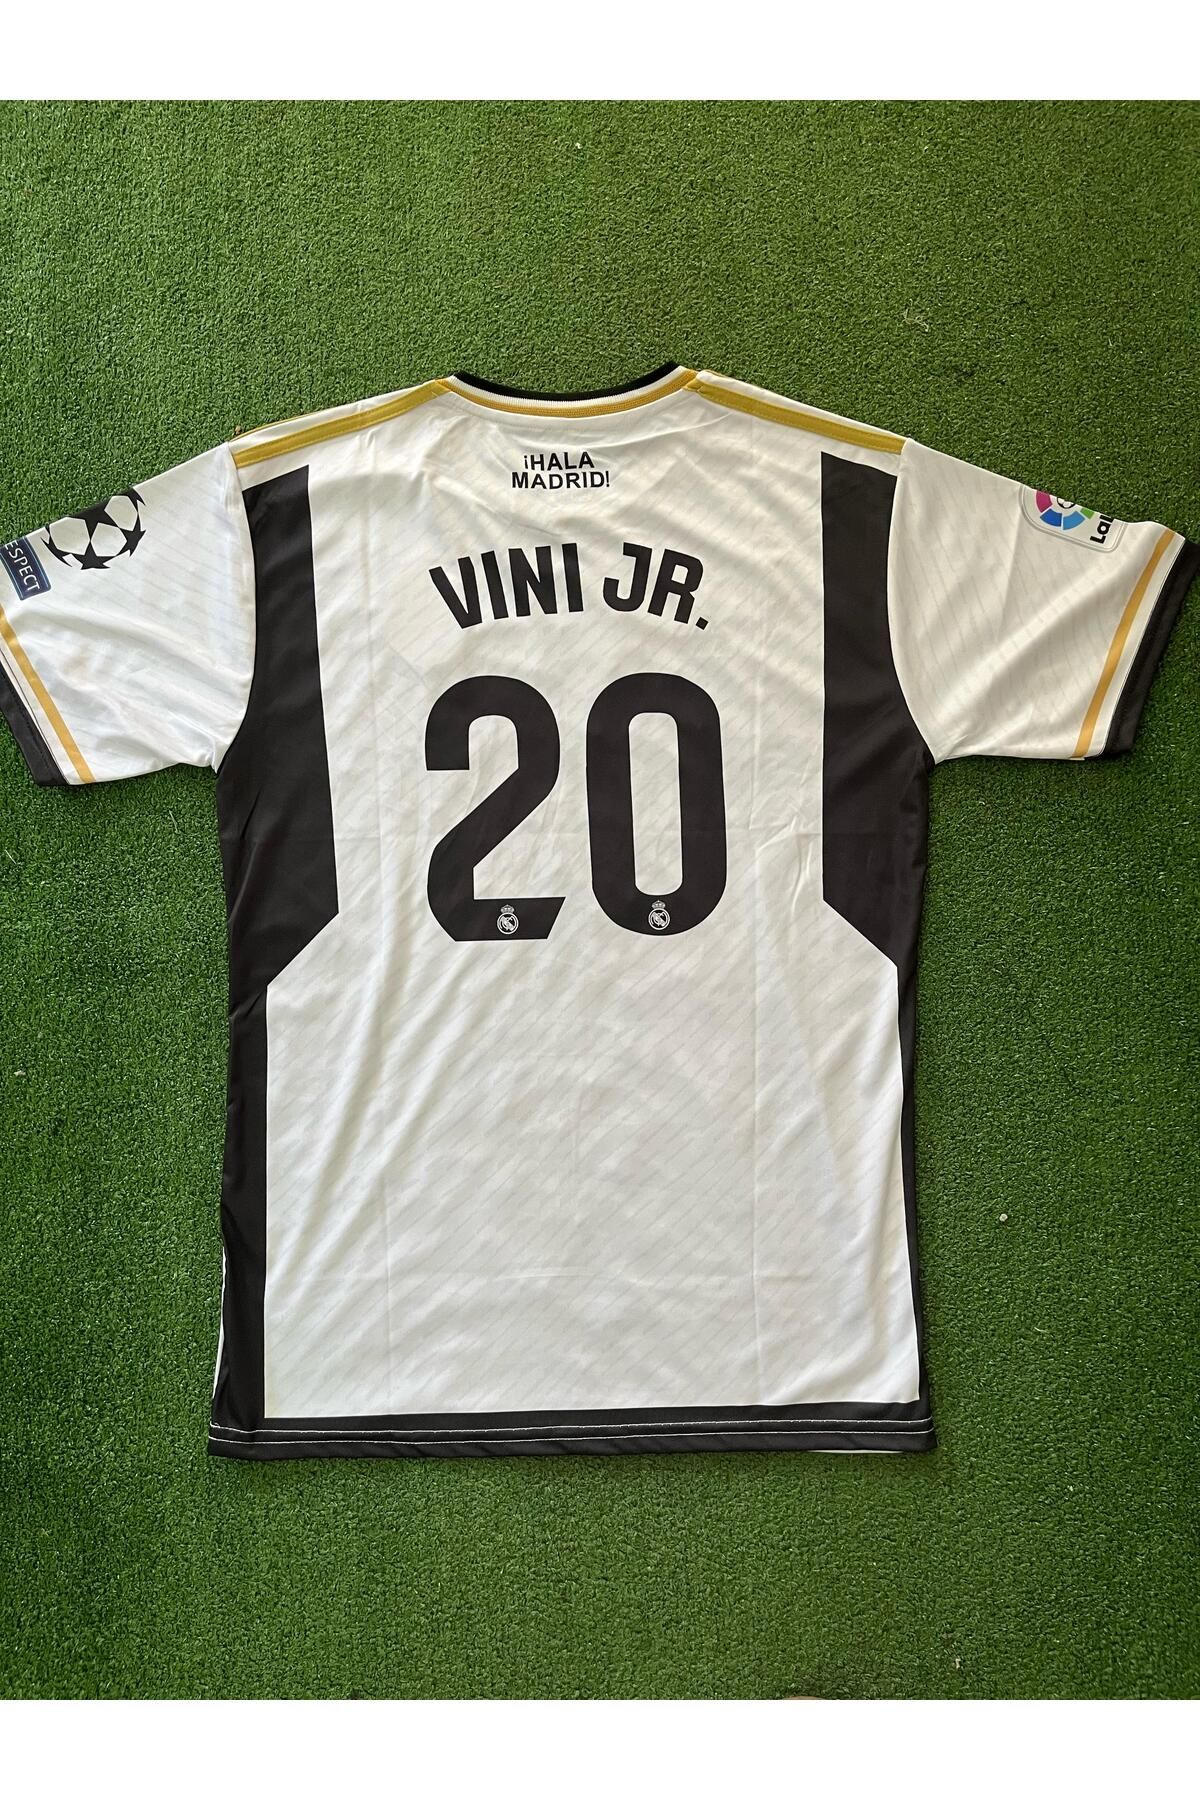 İeys Sport Real Madrid Vinius Jr. Forma / Vini Jr. Real Madrid Beyaz Forma